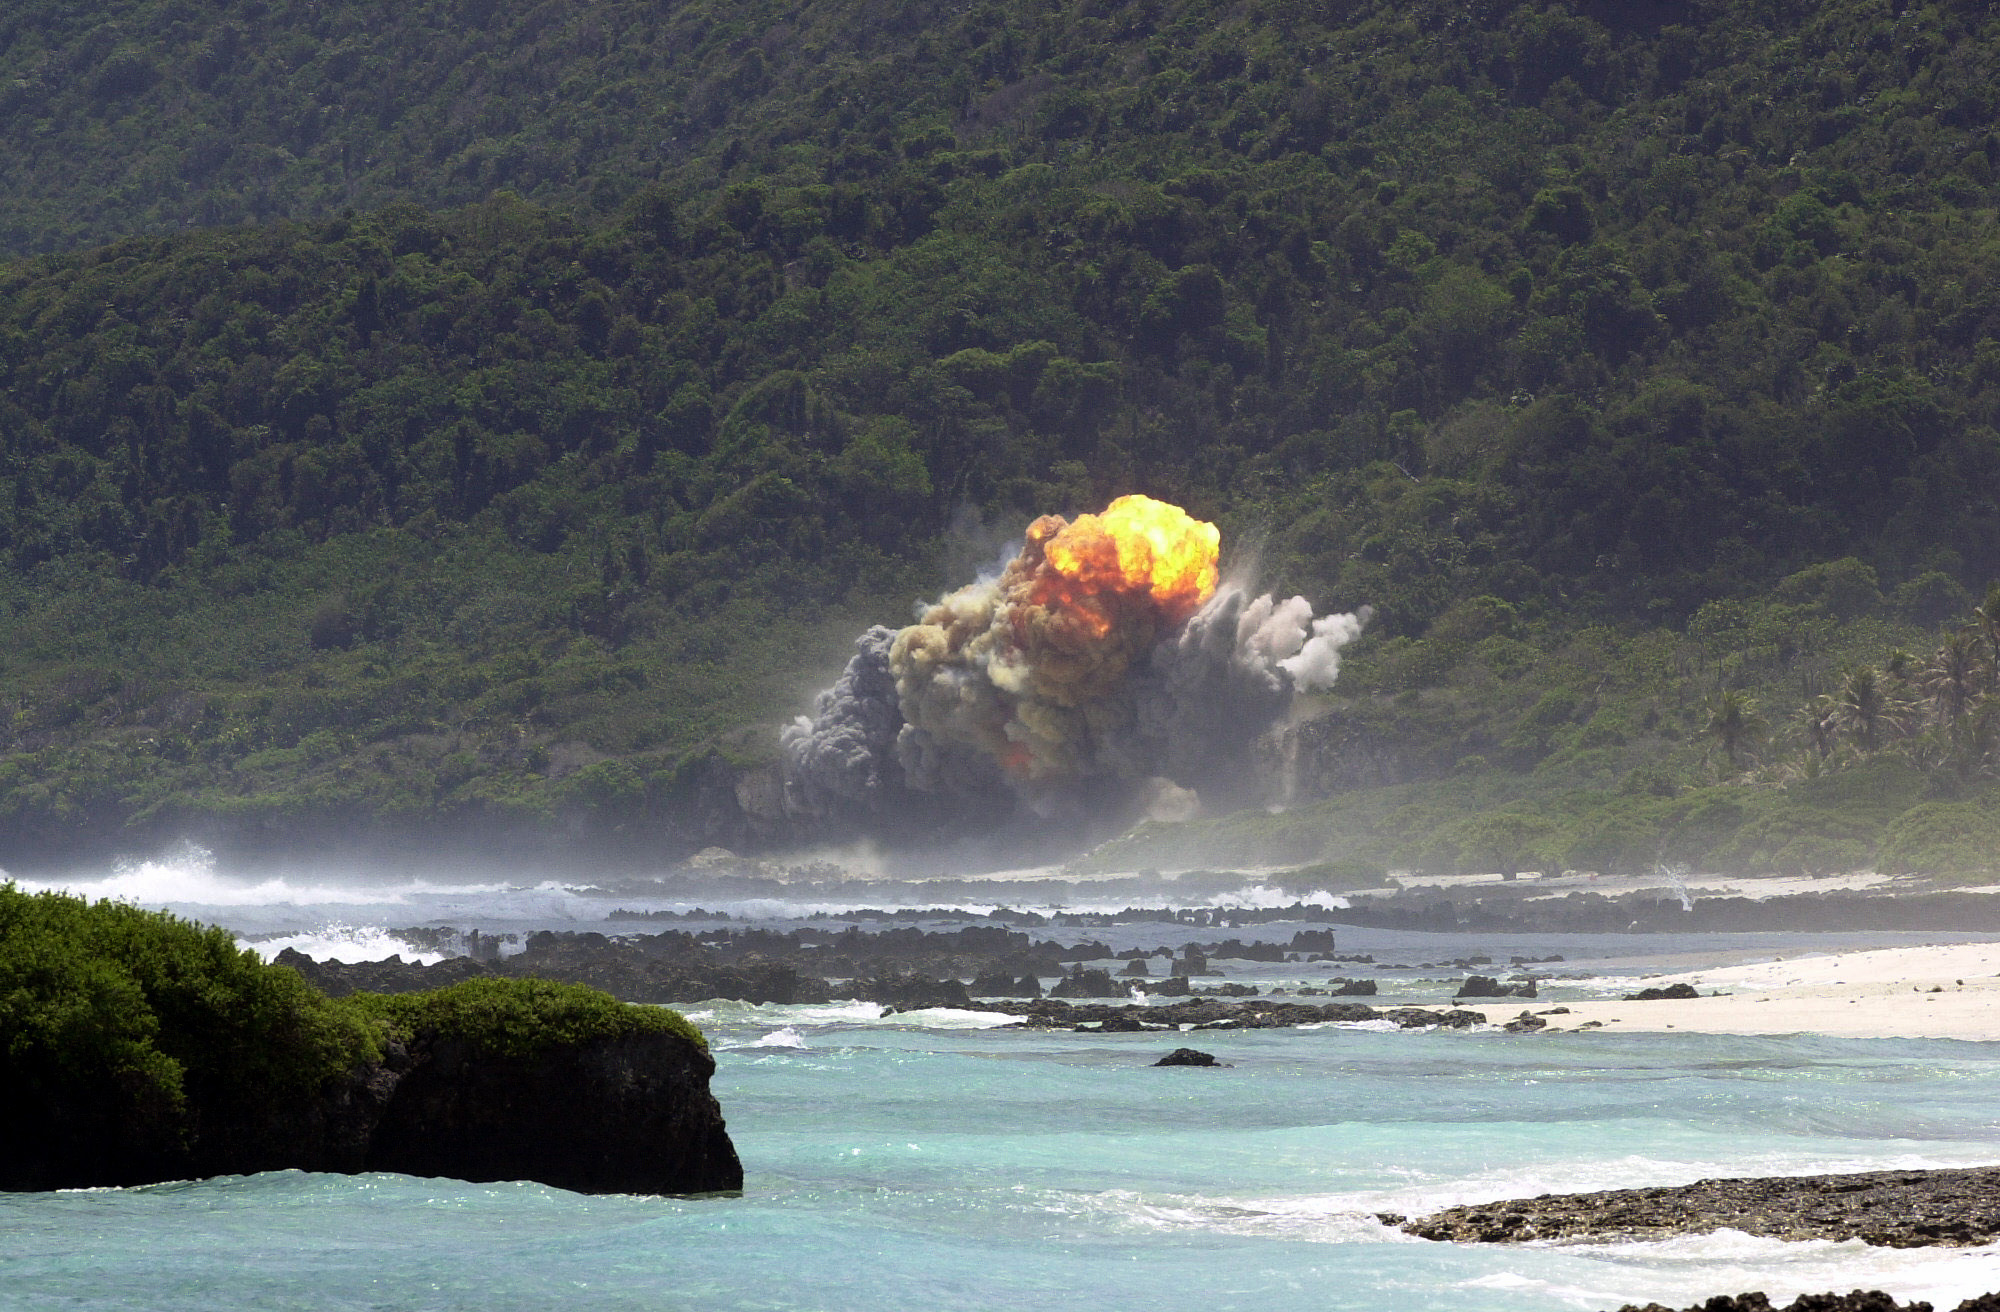 A large explosion on a beach